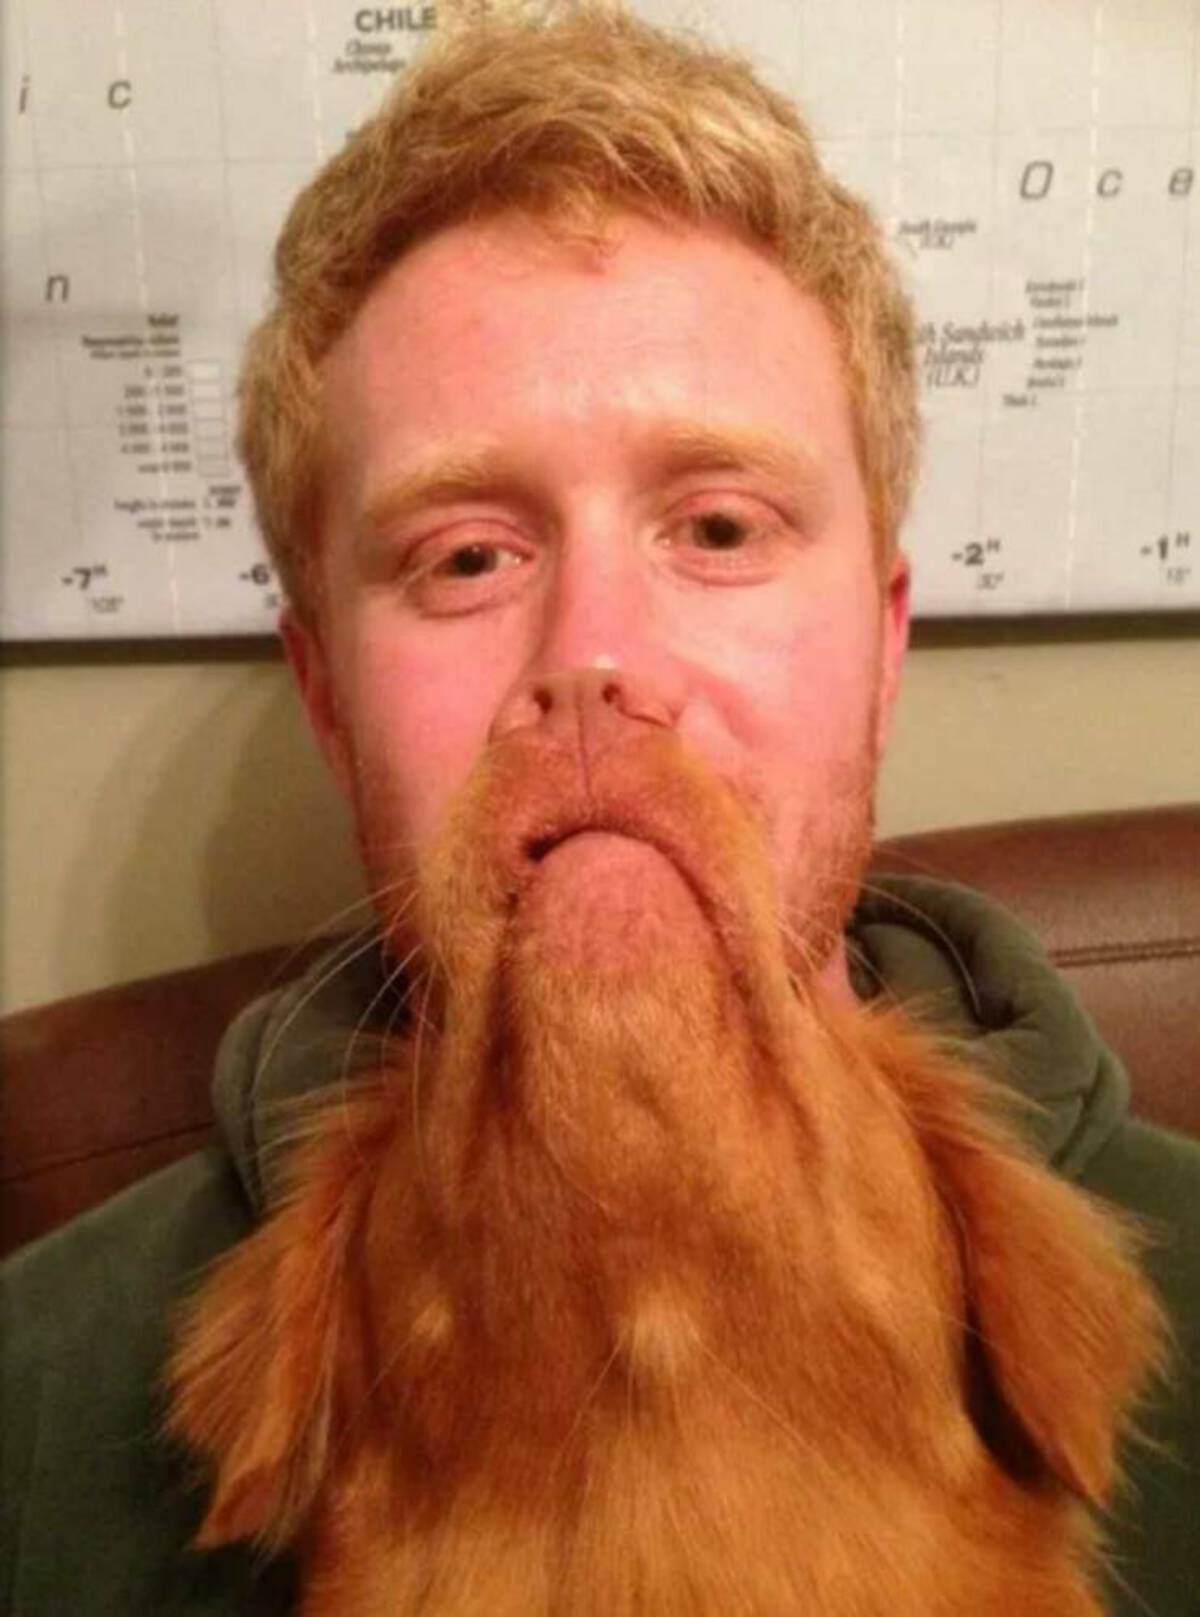 ginger beard man - ic n Chile 24 D c e 1H